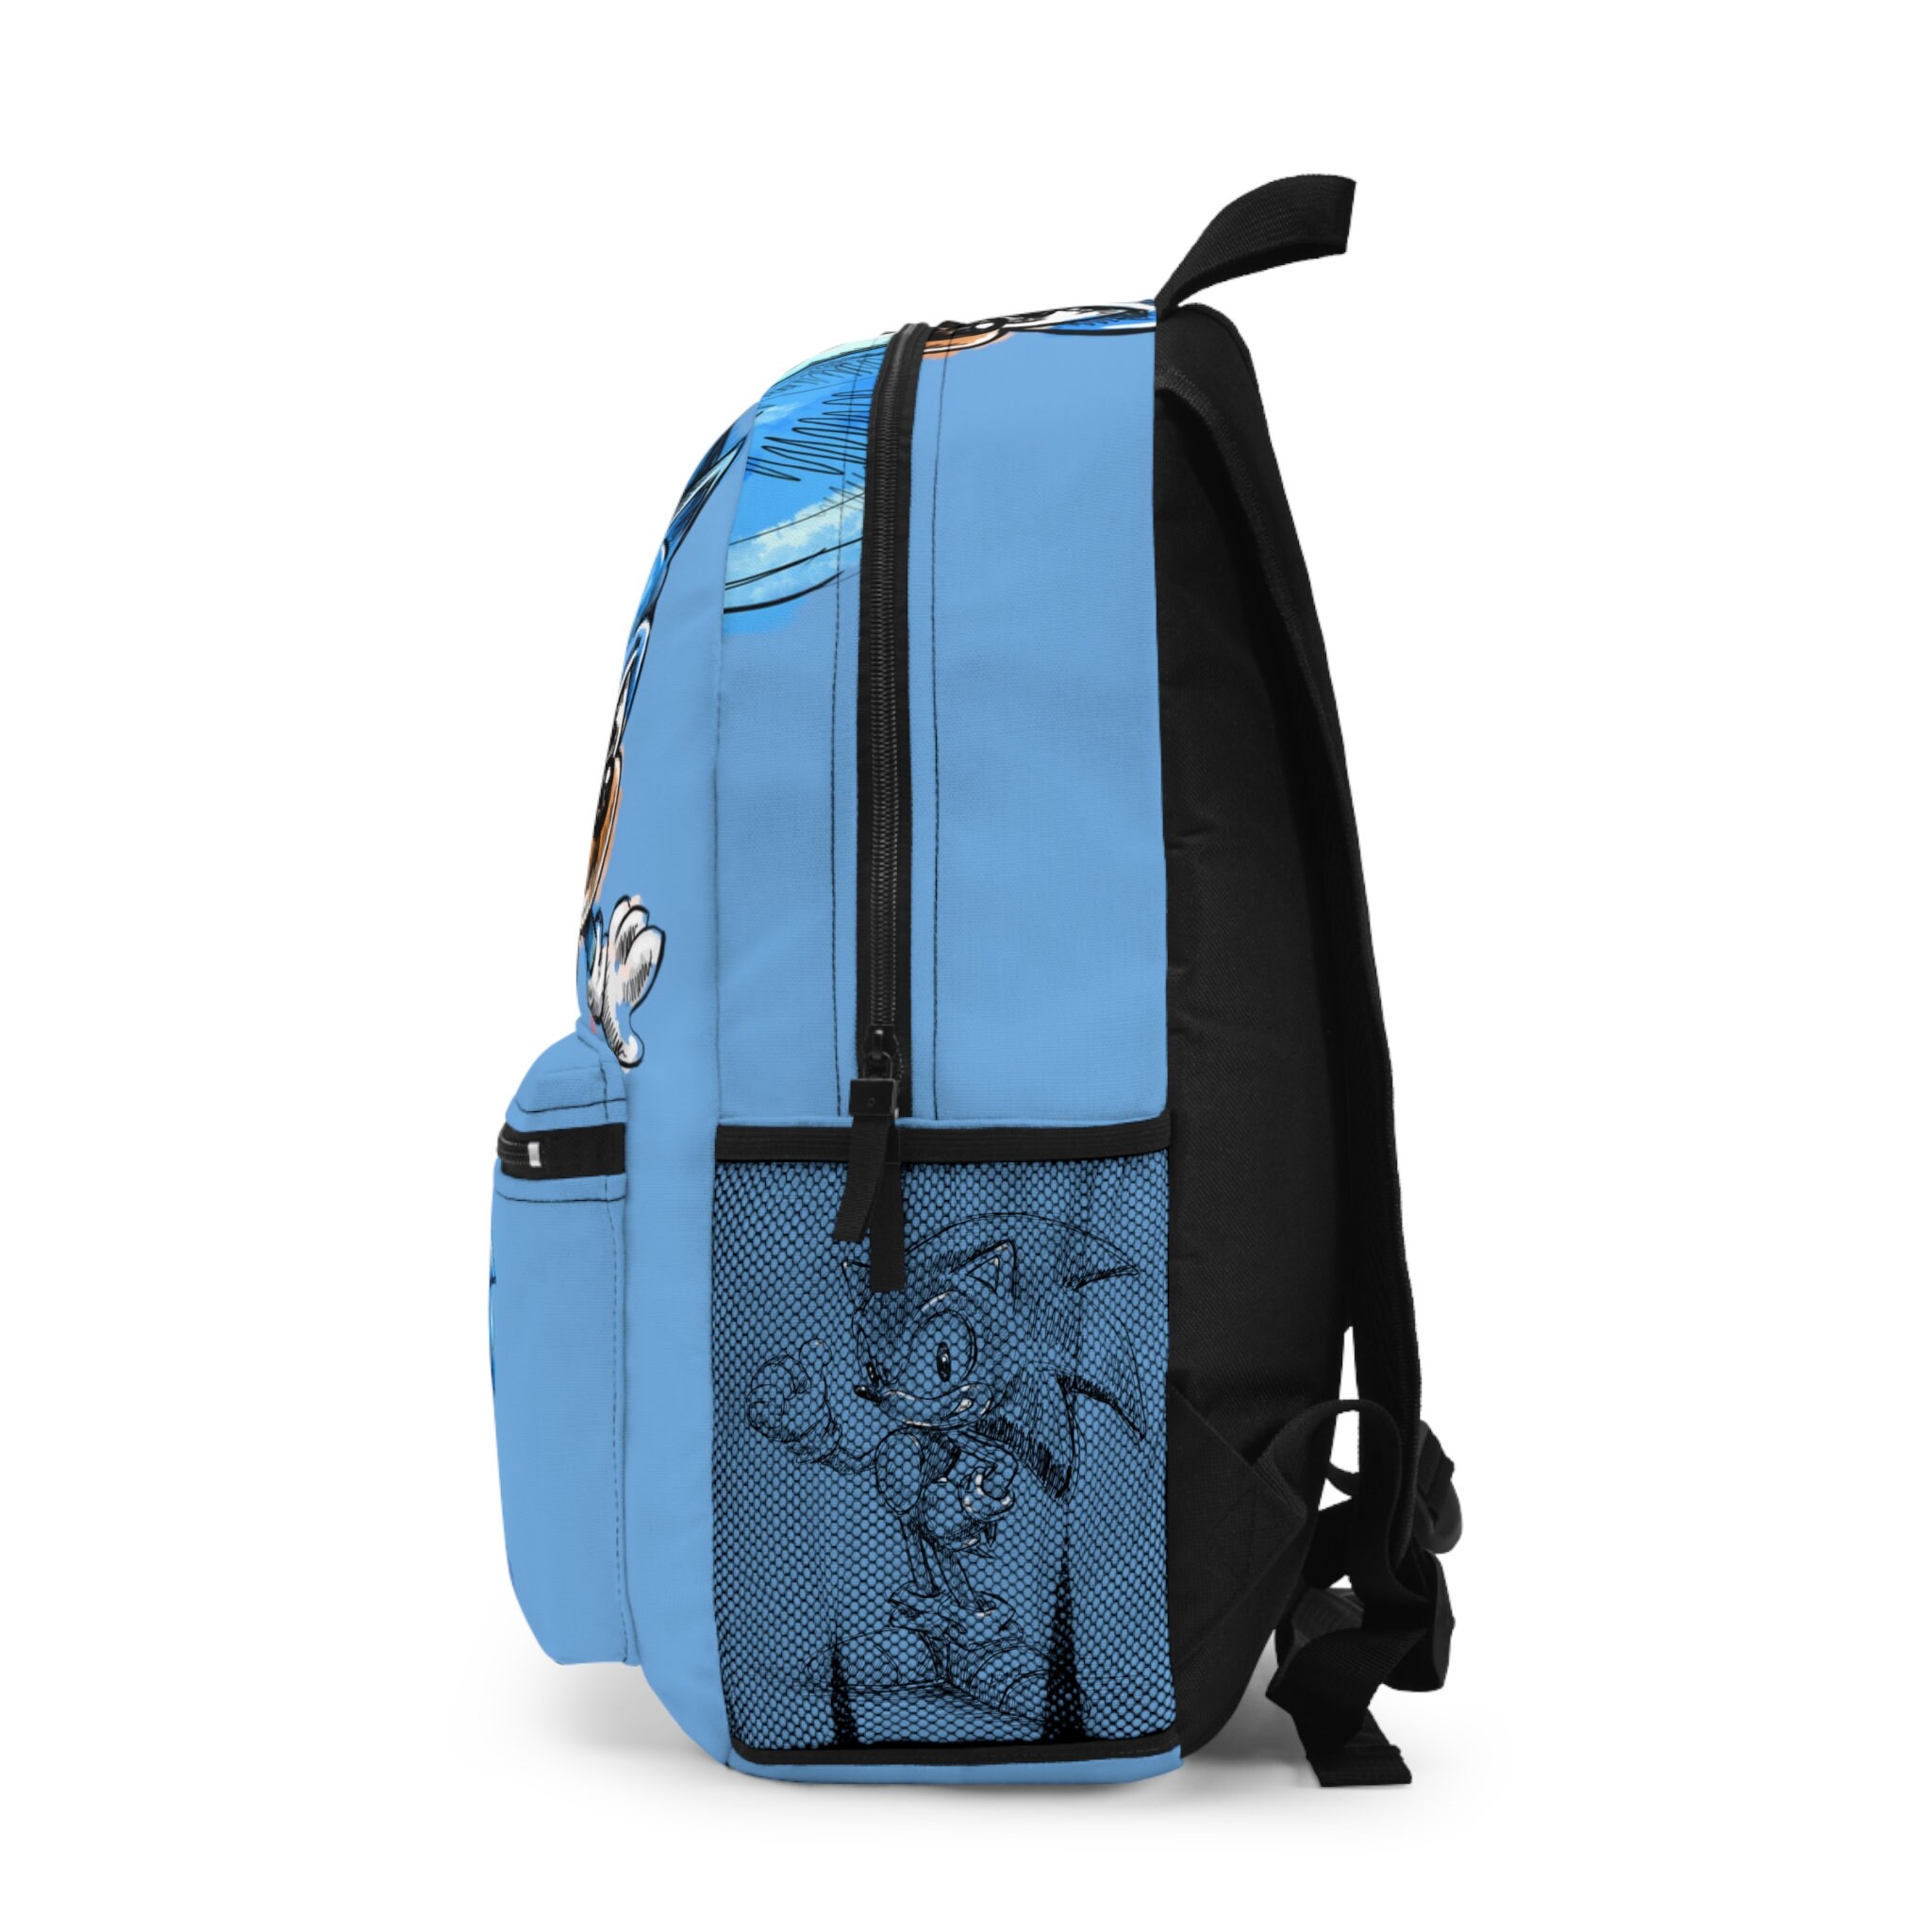 Sonic Blue School Backpack, Blue School Bag